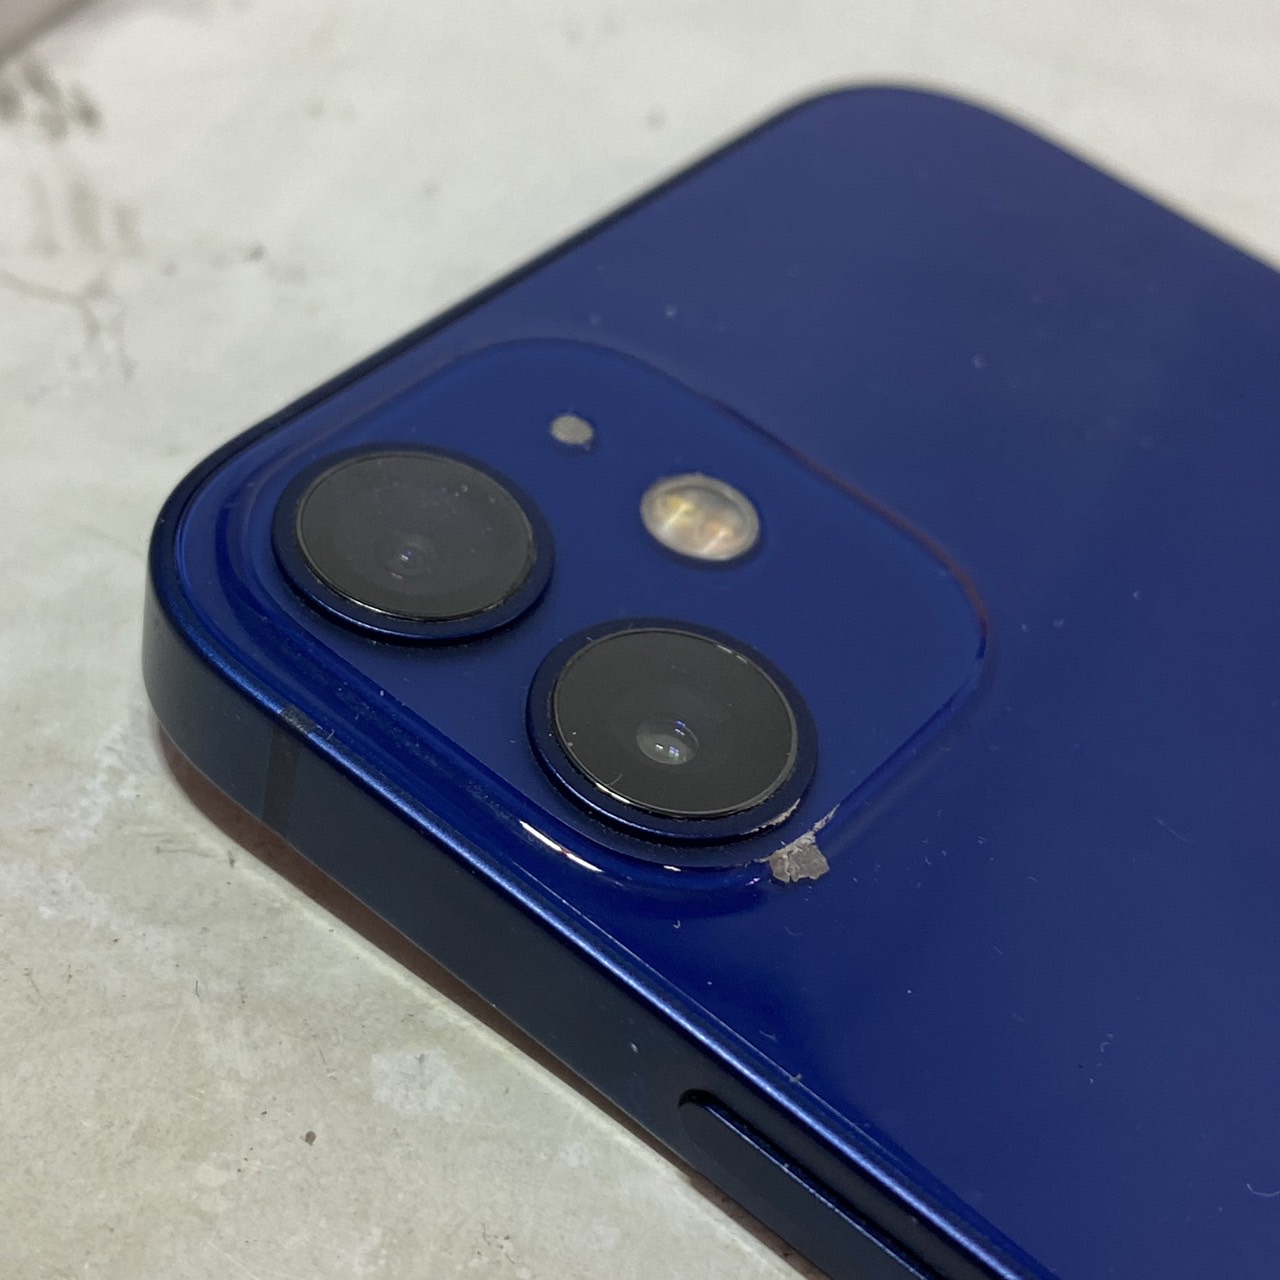 APPLE(アップル) iPhone 12 mini 128GB SIMフリー [ブルー]の激安通販